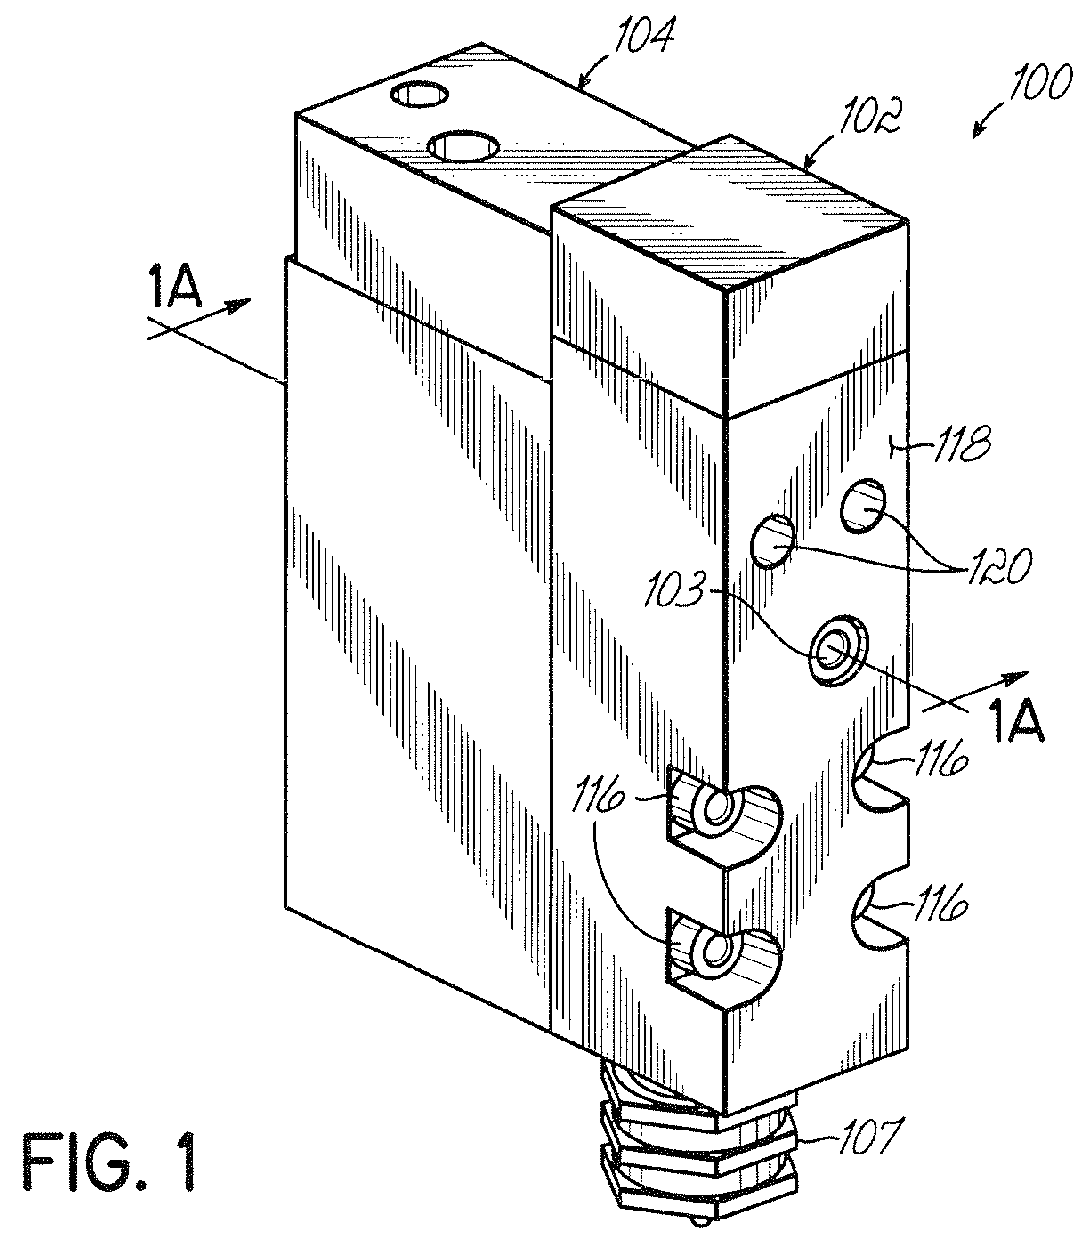 Dispenser having a pivoting actuator assembly